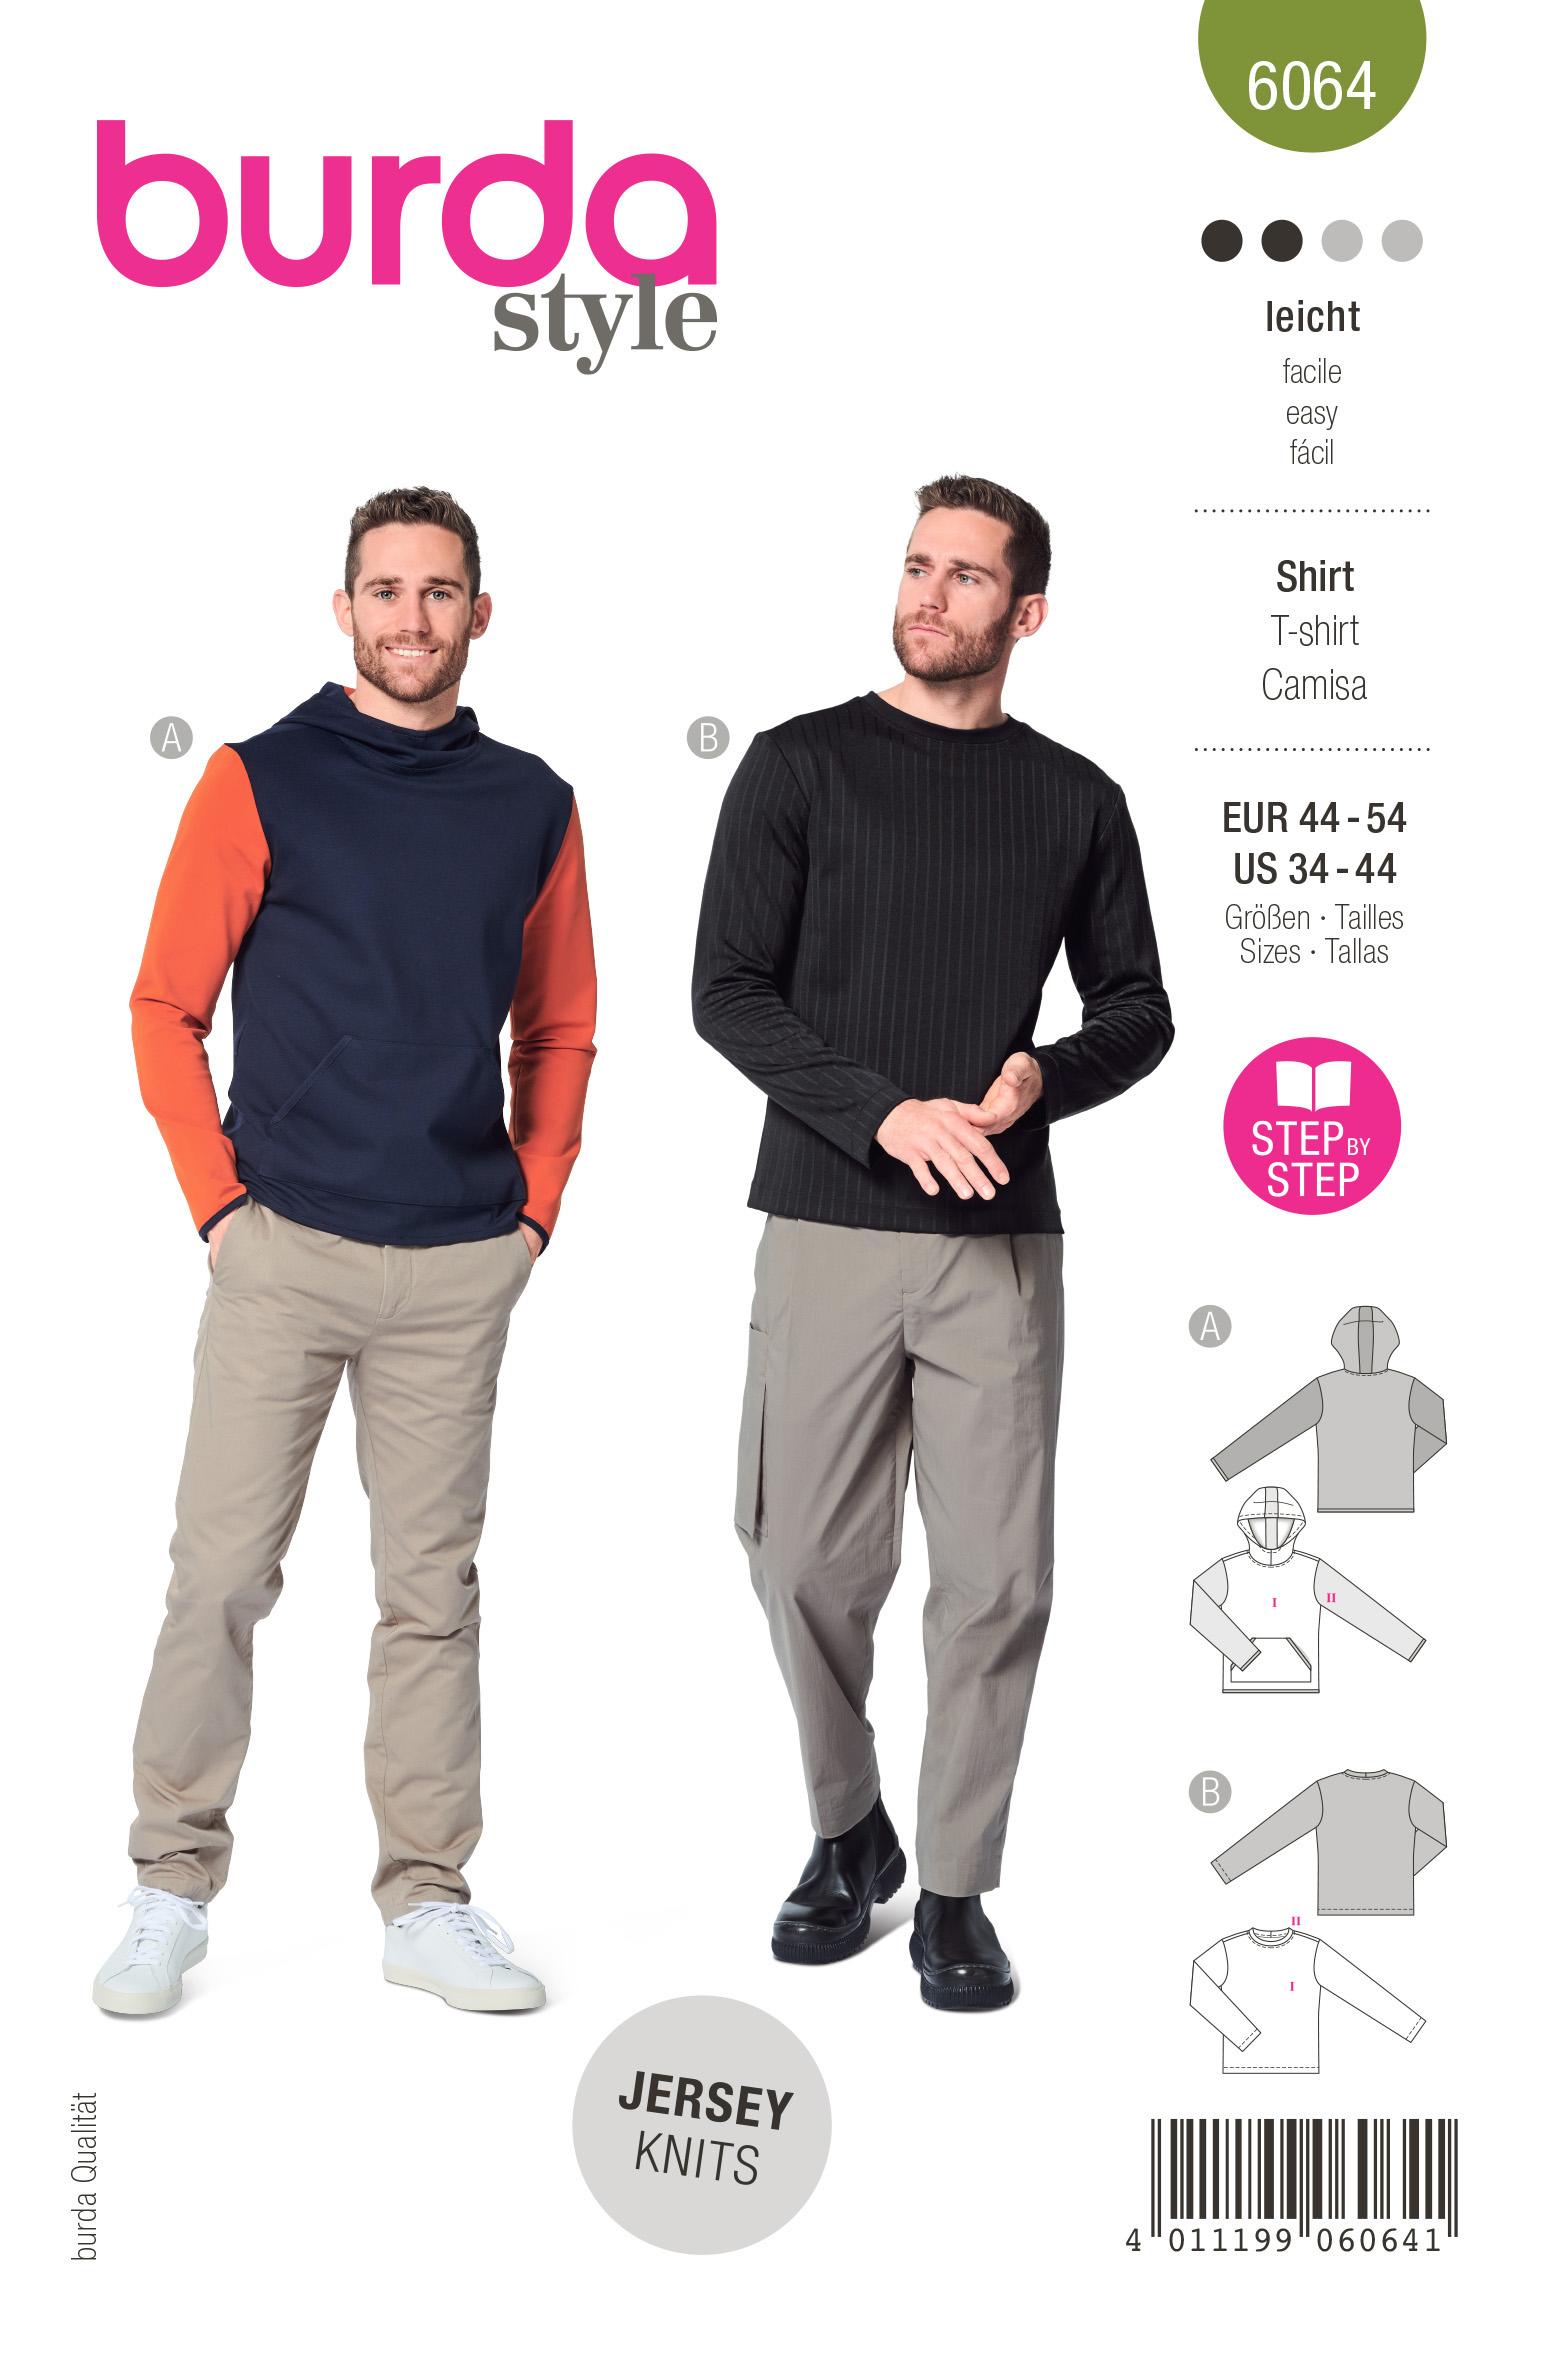 Burda Style Pattern 6064 Men's Classic Sweatshirt with Hood or Neckband